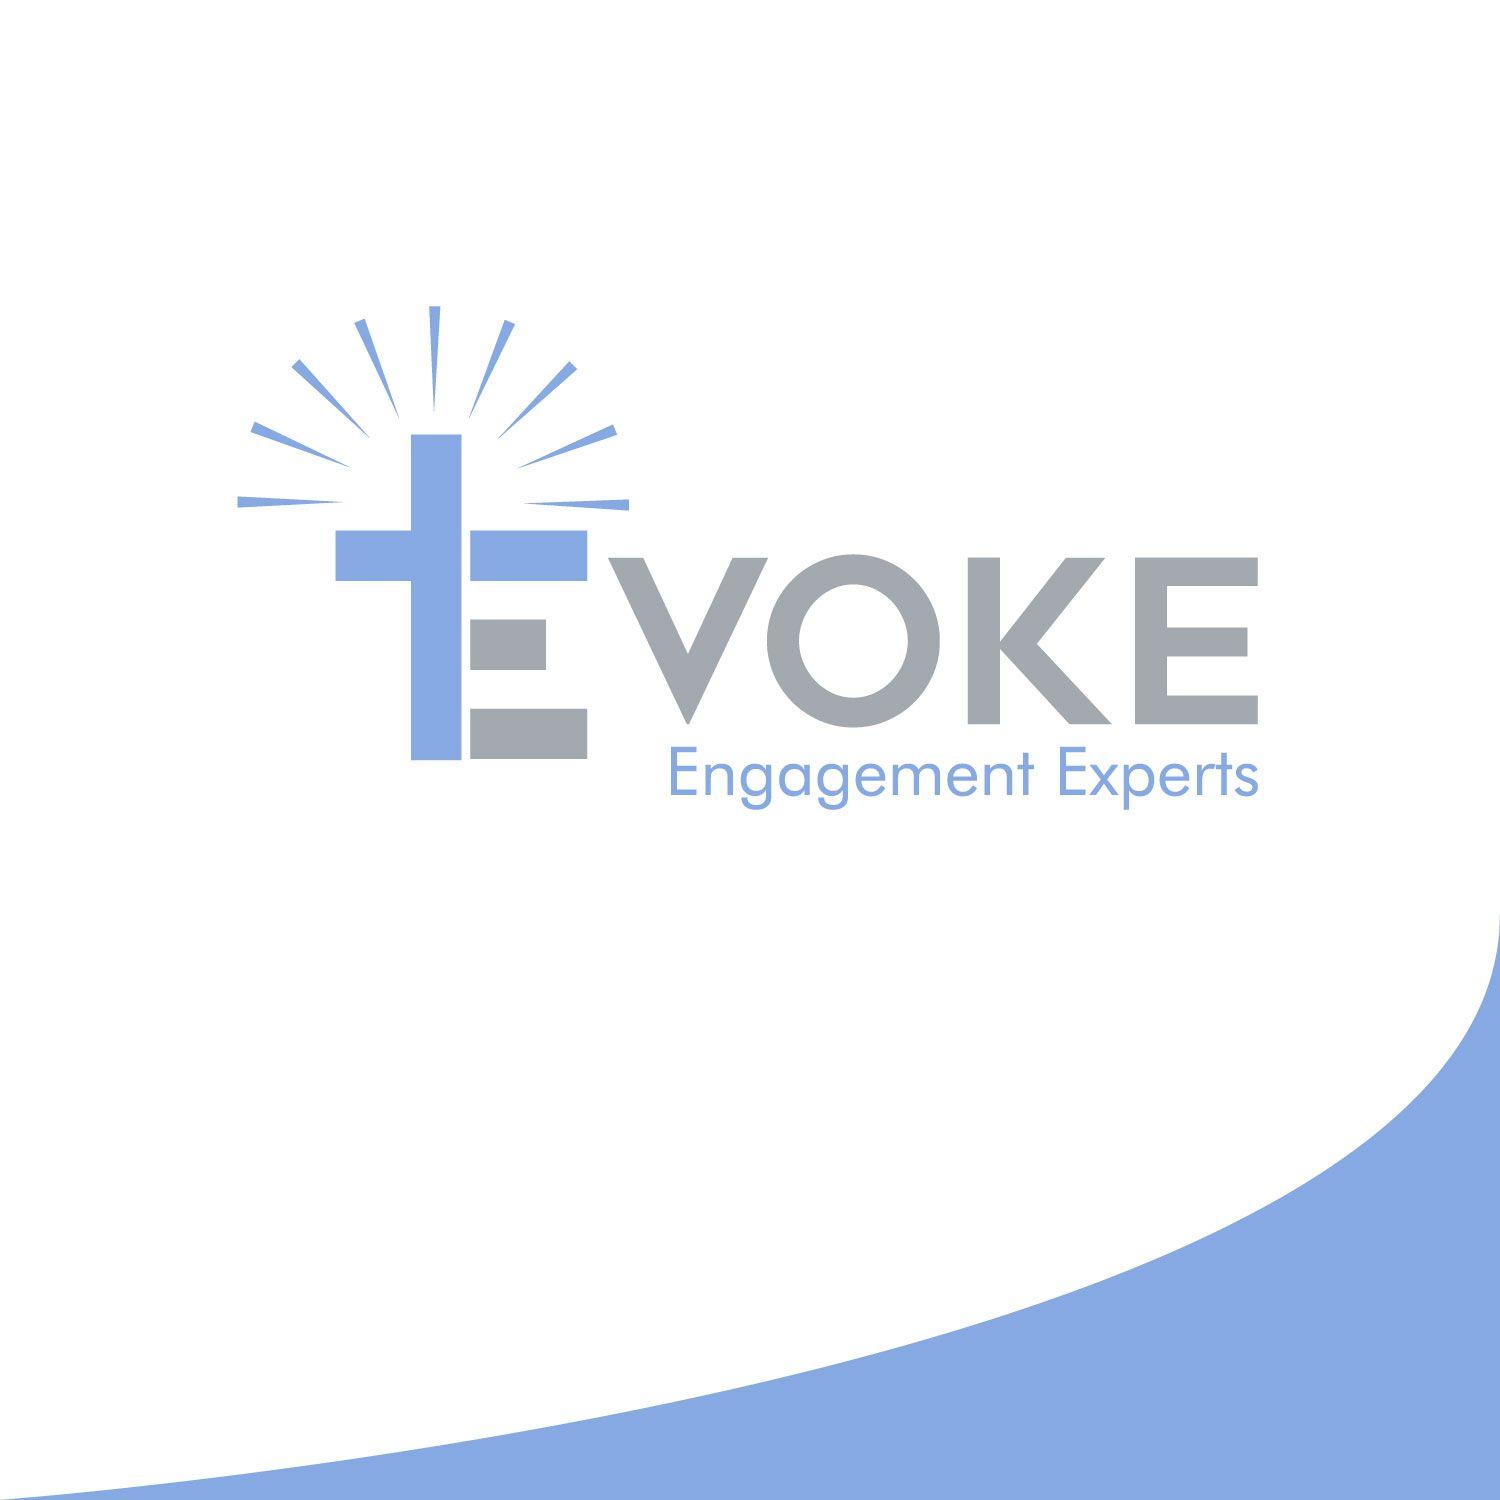 Freeman Company Logo - Bold, Modern Logo Design for Evoke by Freeman creation | Design ...